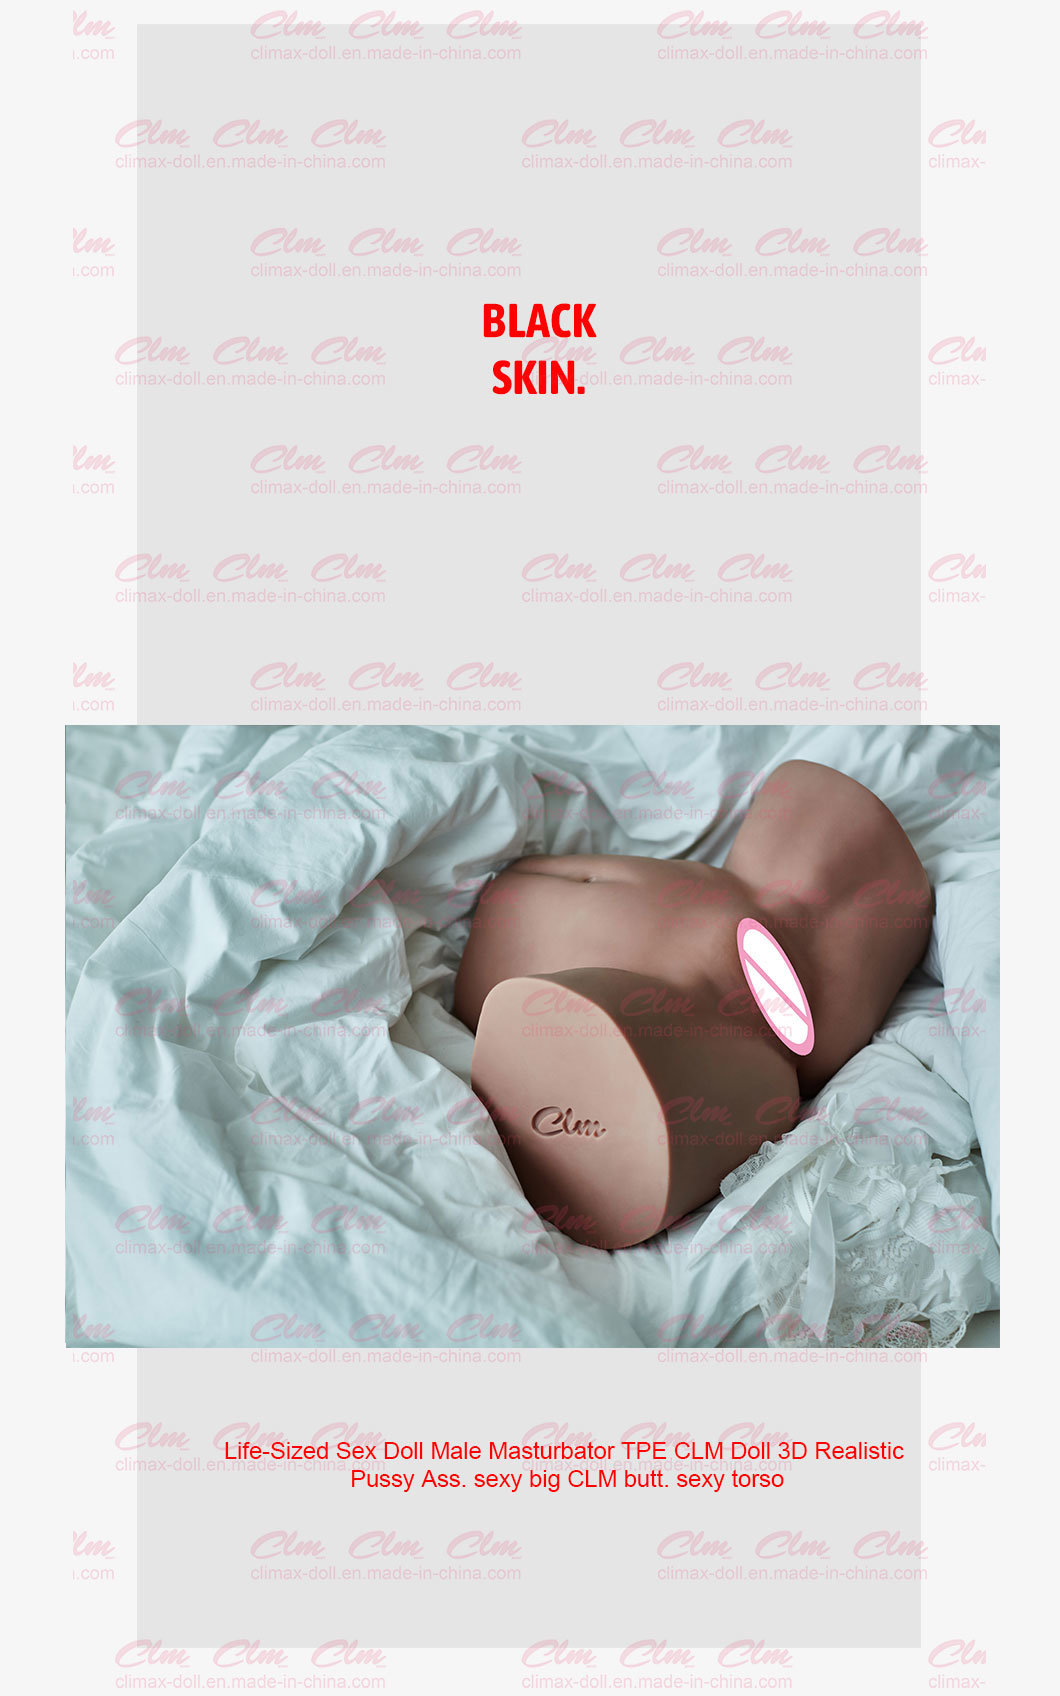 Clm (Climax Doll) 100% Real Skin Feeling Big Ass Doll Masturbator Plastic Sex Toys